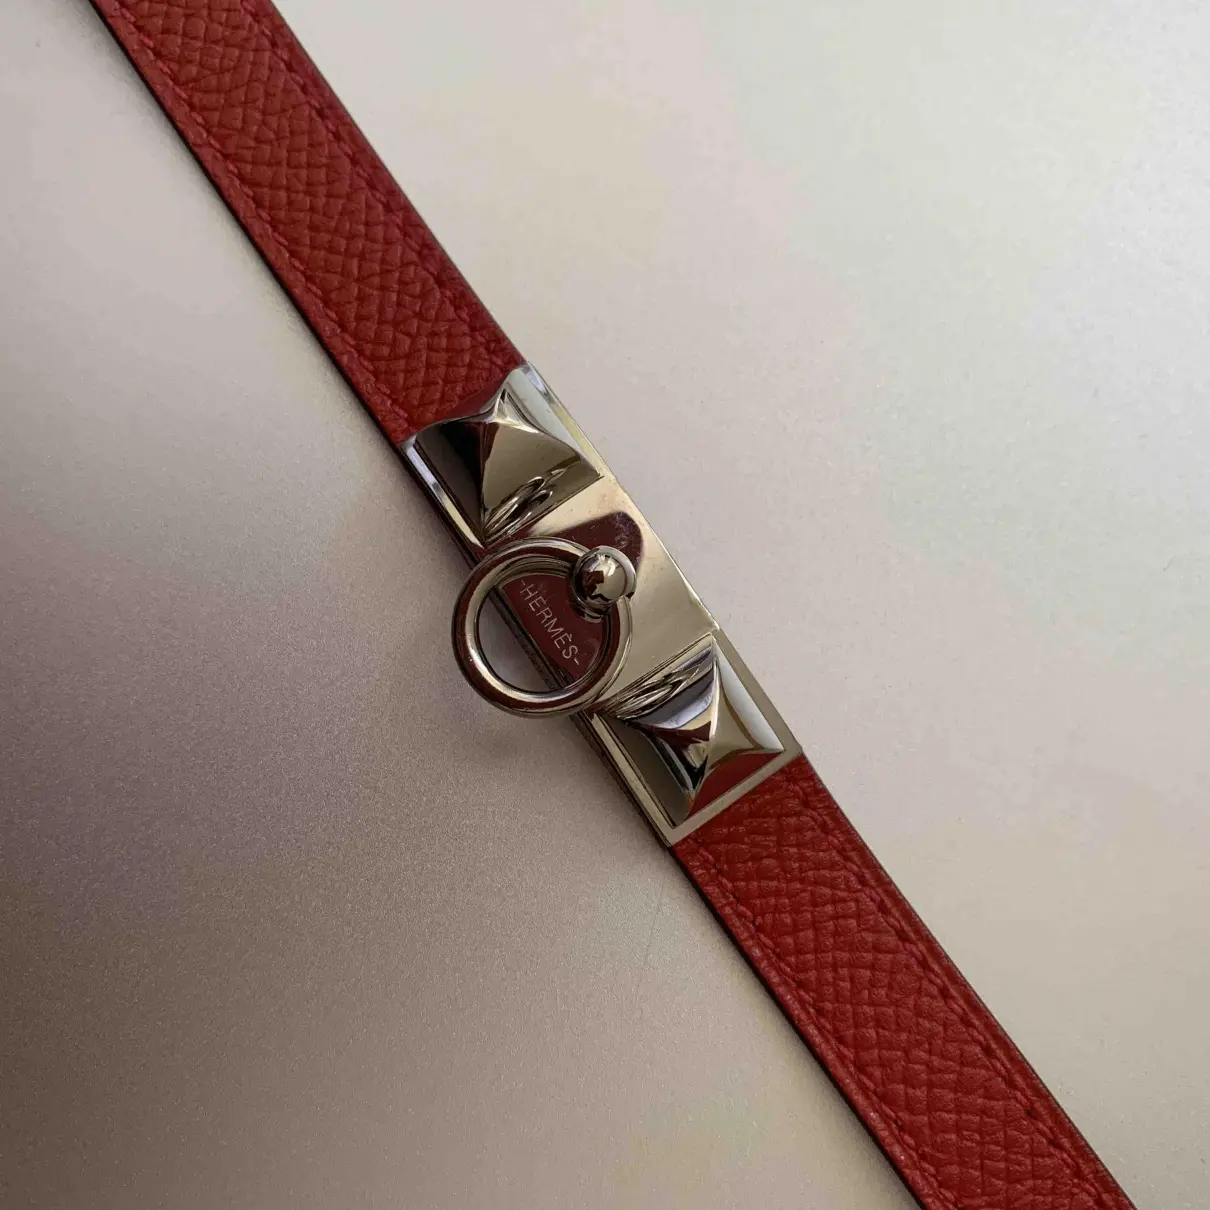 Buy Hermès Rivale leather bracelet online